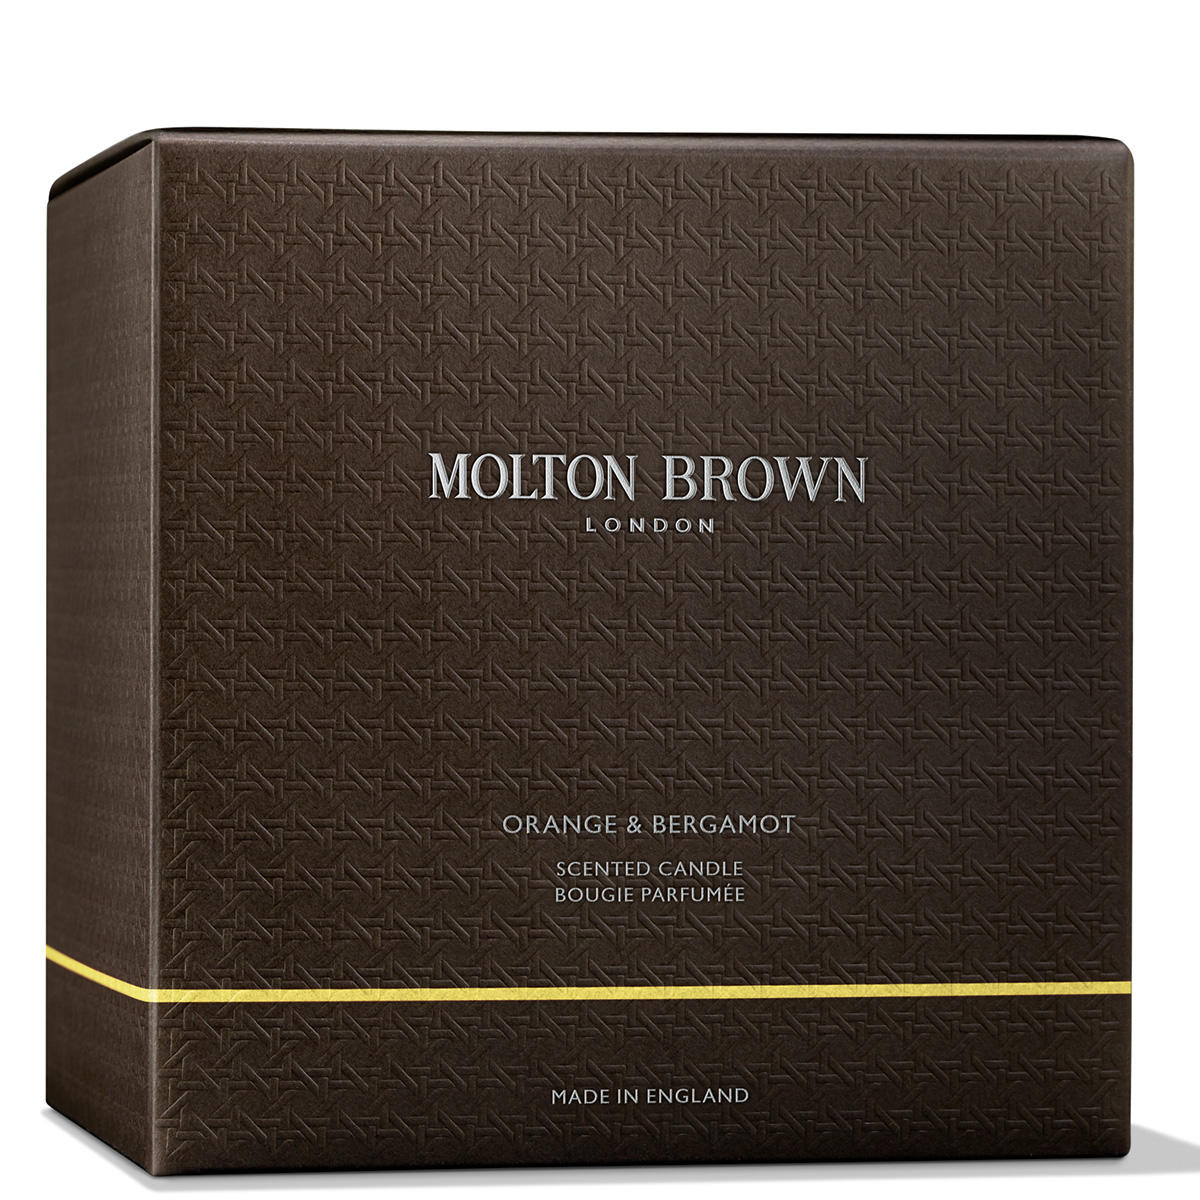 MOLTON BROWN Orange & Bergamot Scented Candle 600 g - 4